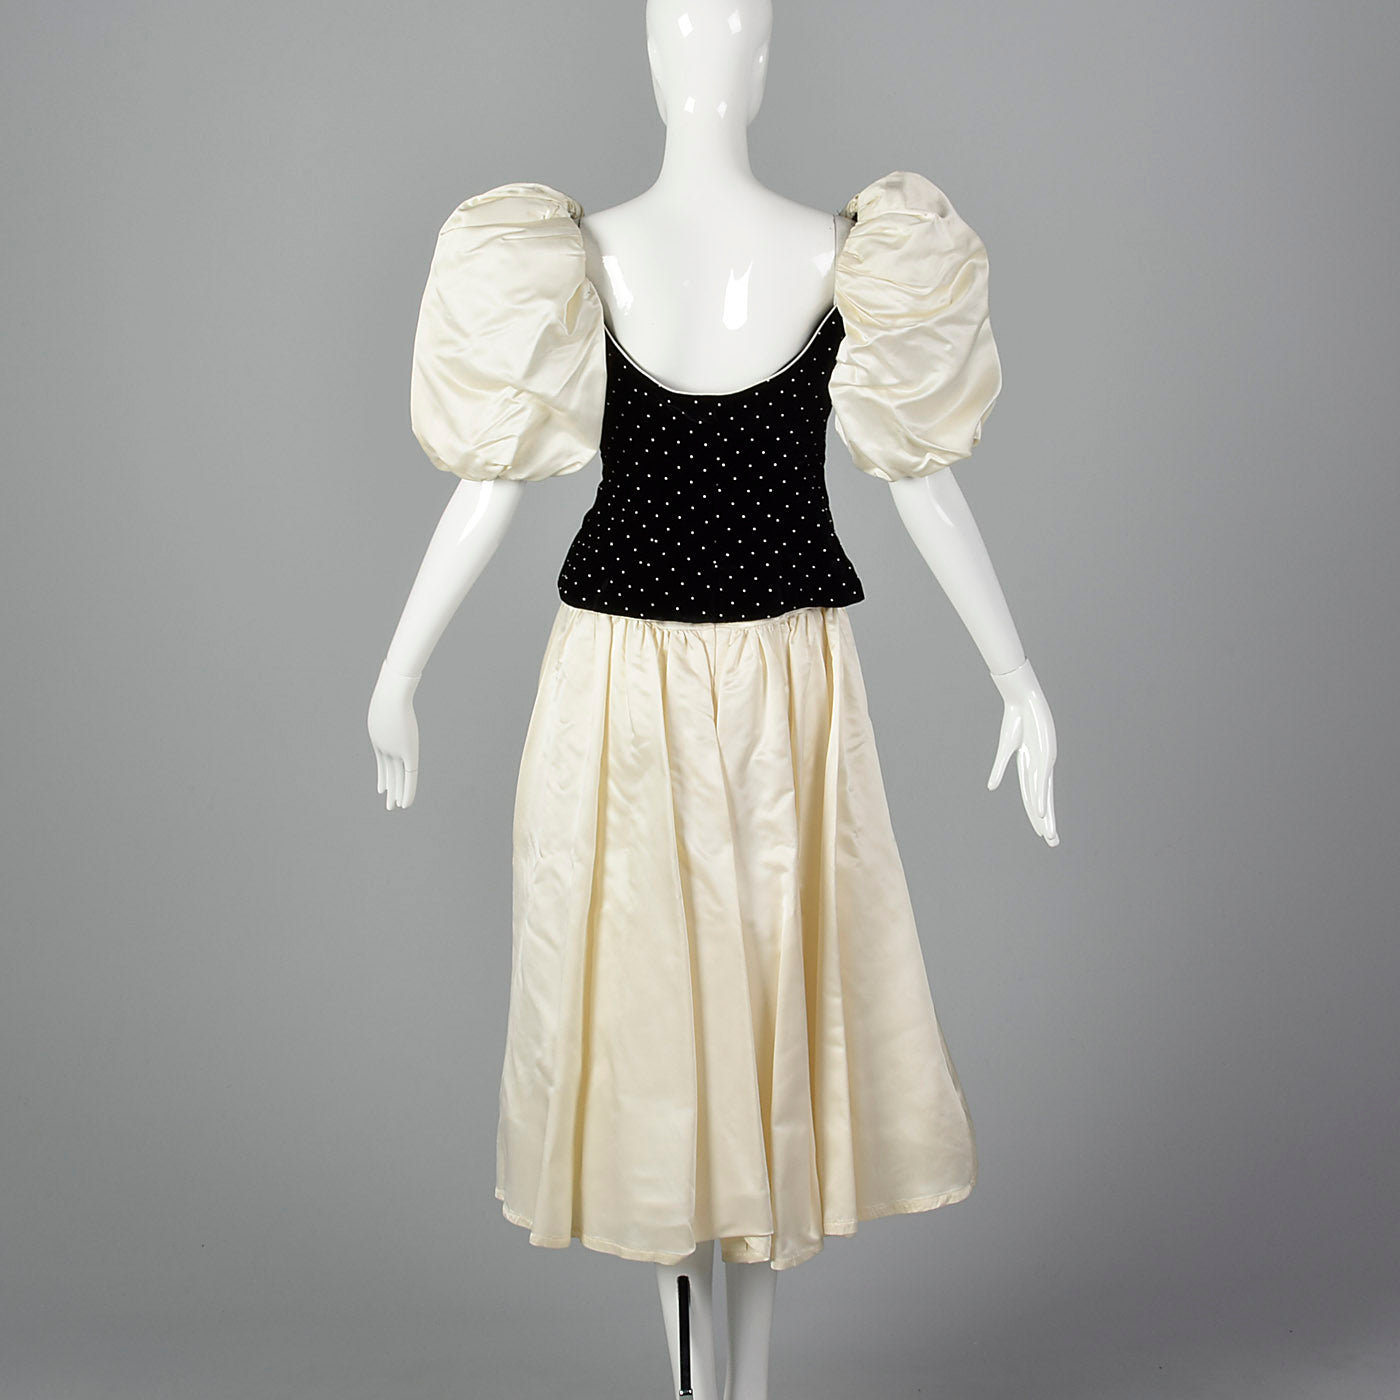 Small Patricia Rhodes 1980s Black Bodice Cream Skirt Dress Set